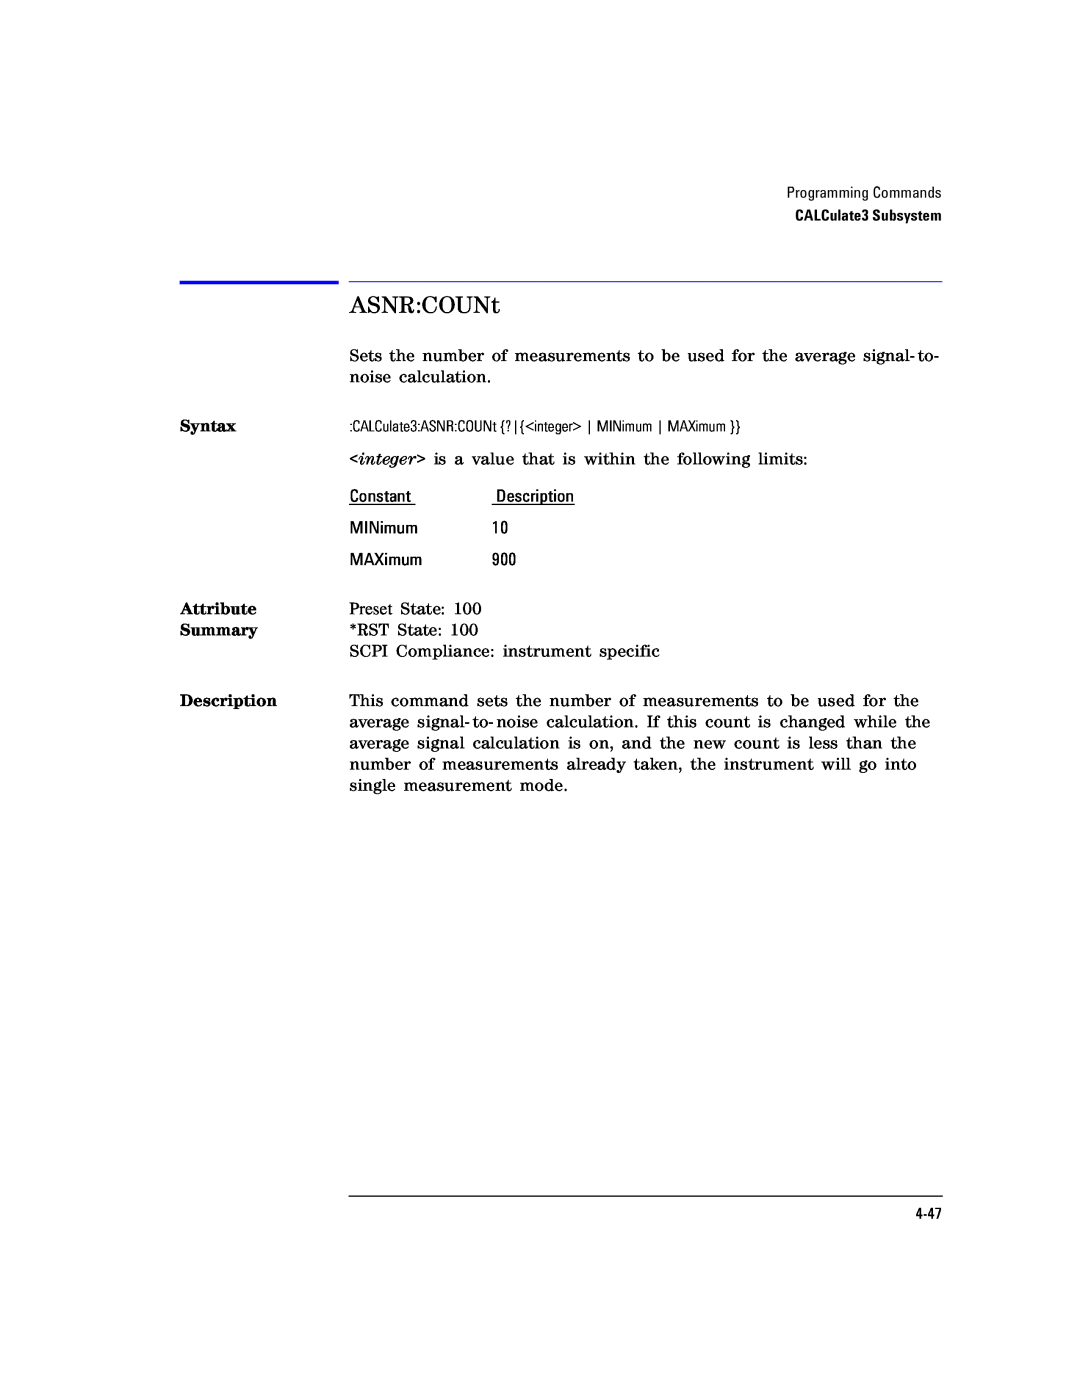 Agilent Technologies Agilent 86120C manual ASNRCOUNt, Syntax, Attribute, Summary, Description 